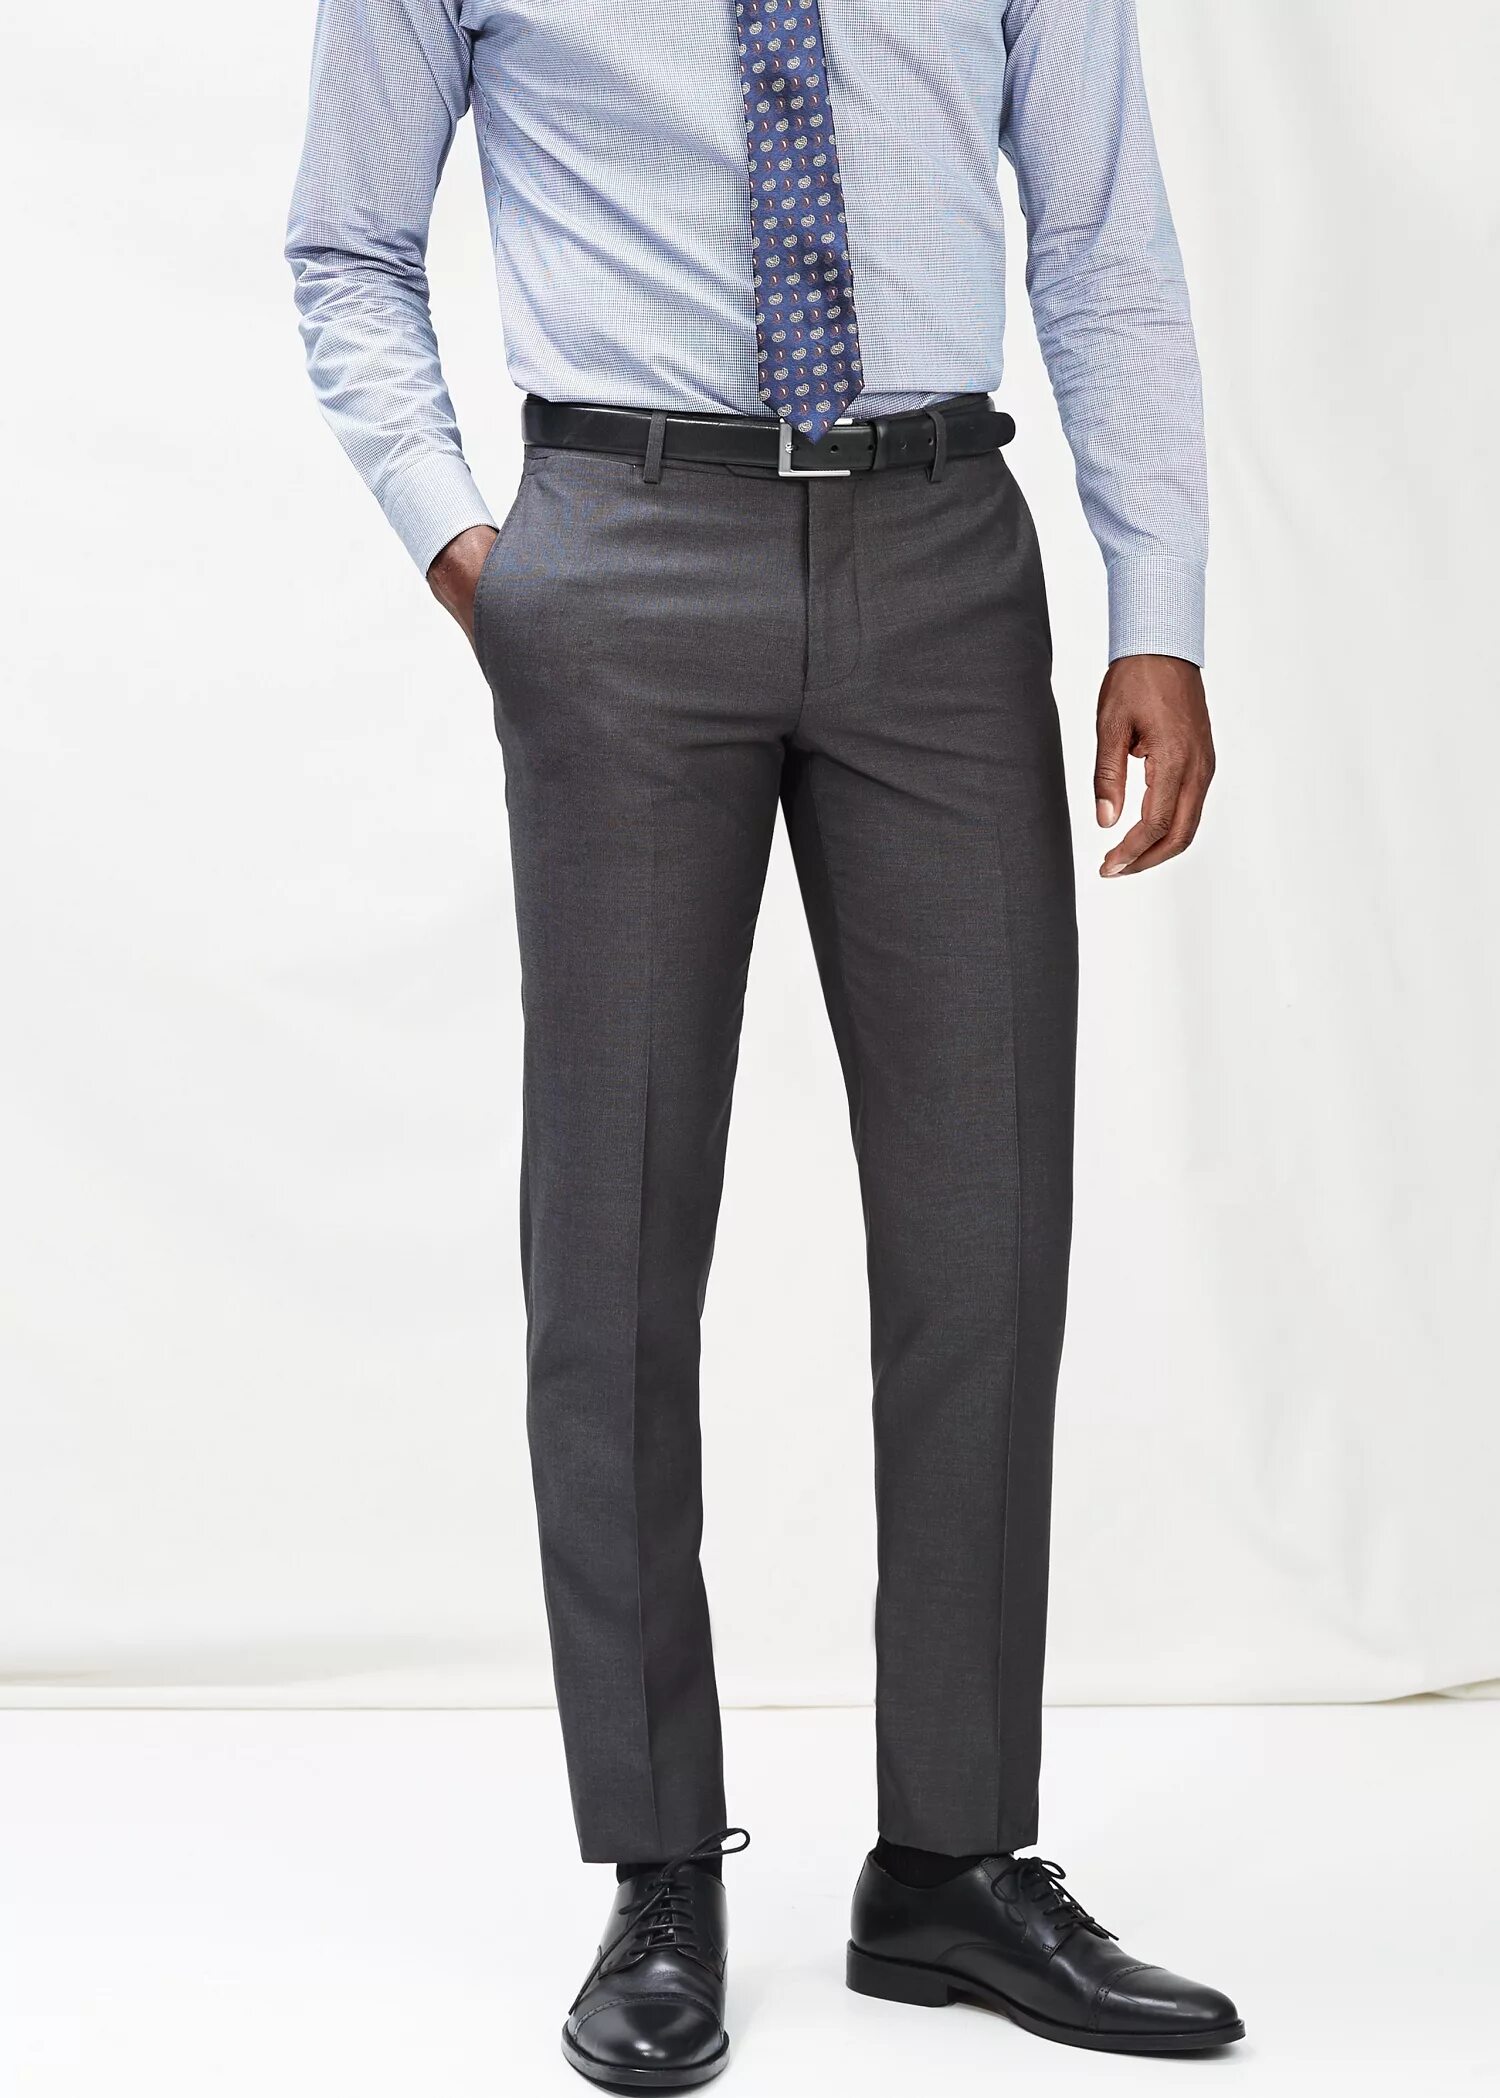 Mango брюки мужские 70503 tailored. Брюки слим фит мужские. Mango Suit брюки мужские. Костюмные брюки мужские классические.